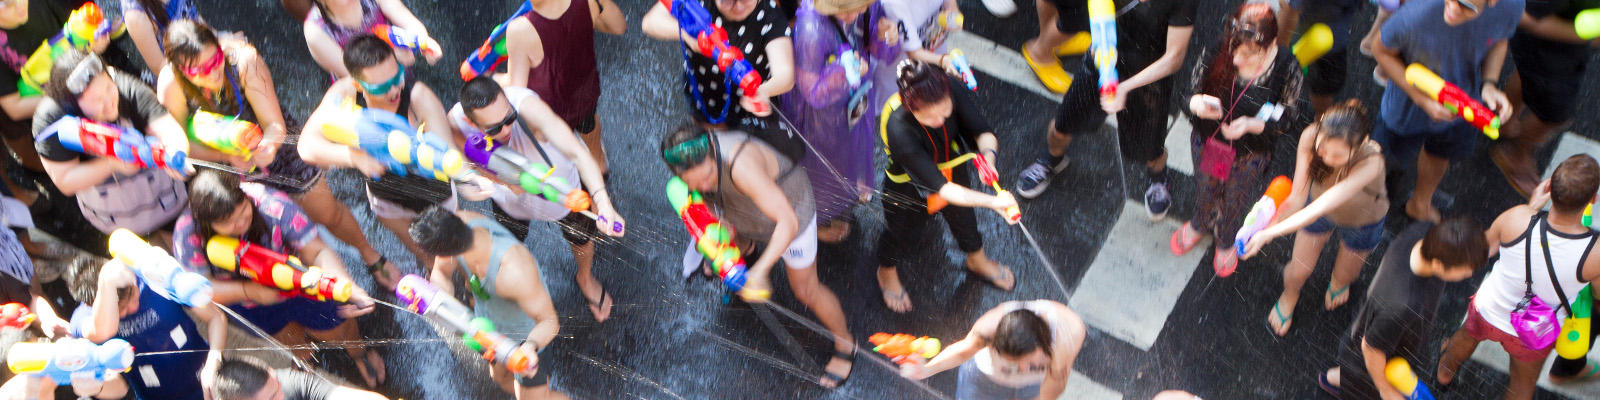 Songkran (Thai New Year) celebrations involve water fights.